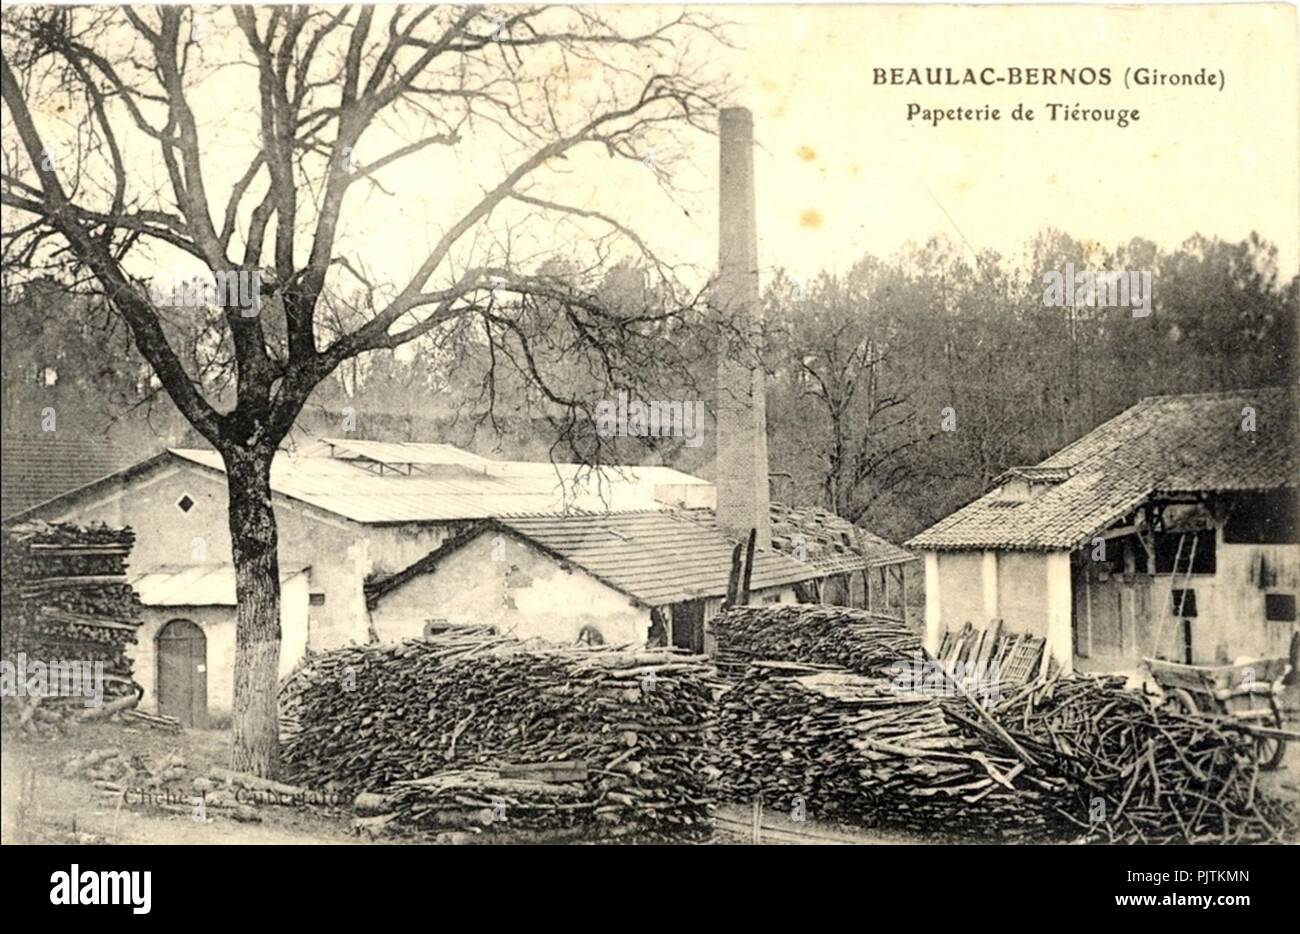 Beaulac-Bernos - papeterie de Tiérouge. Stock Photo